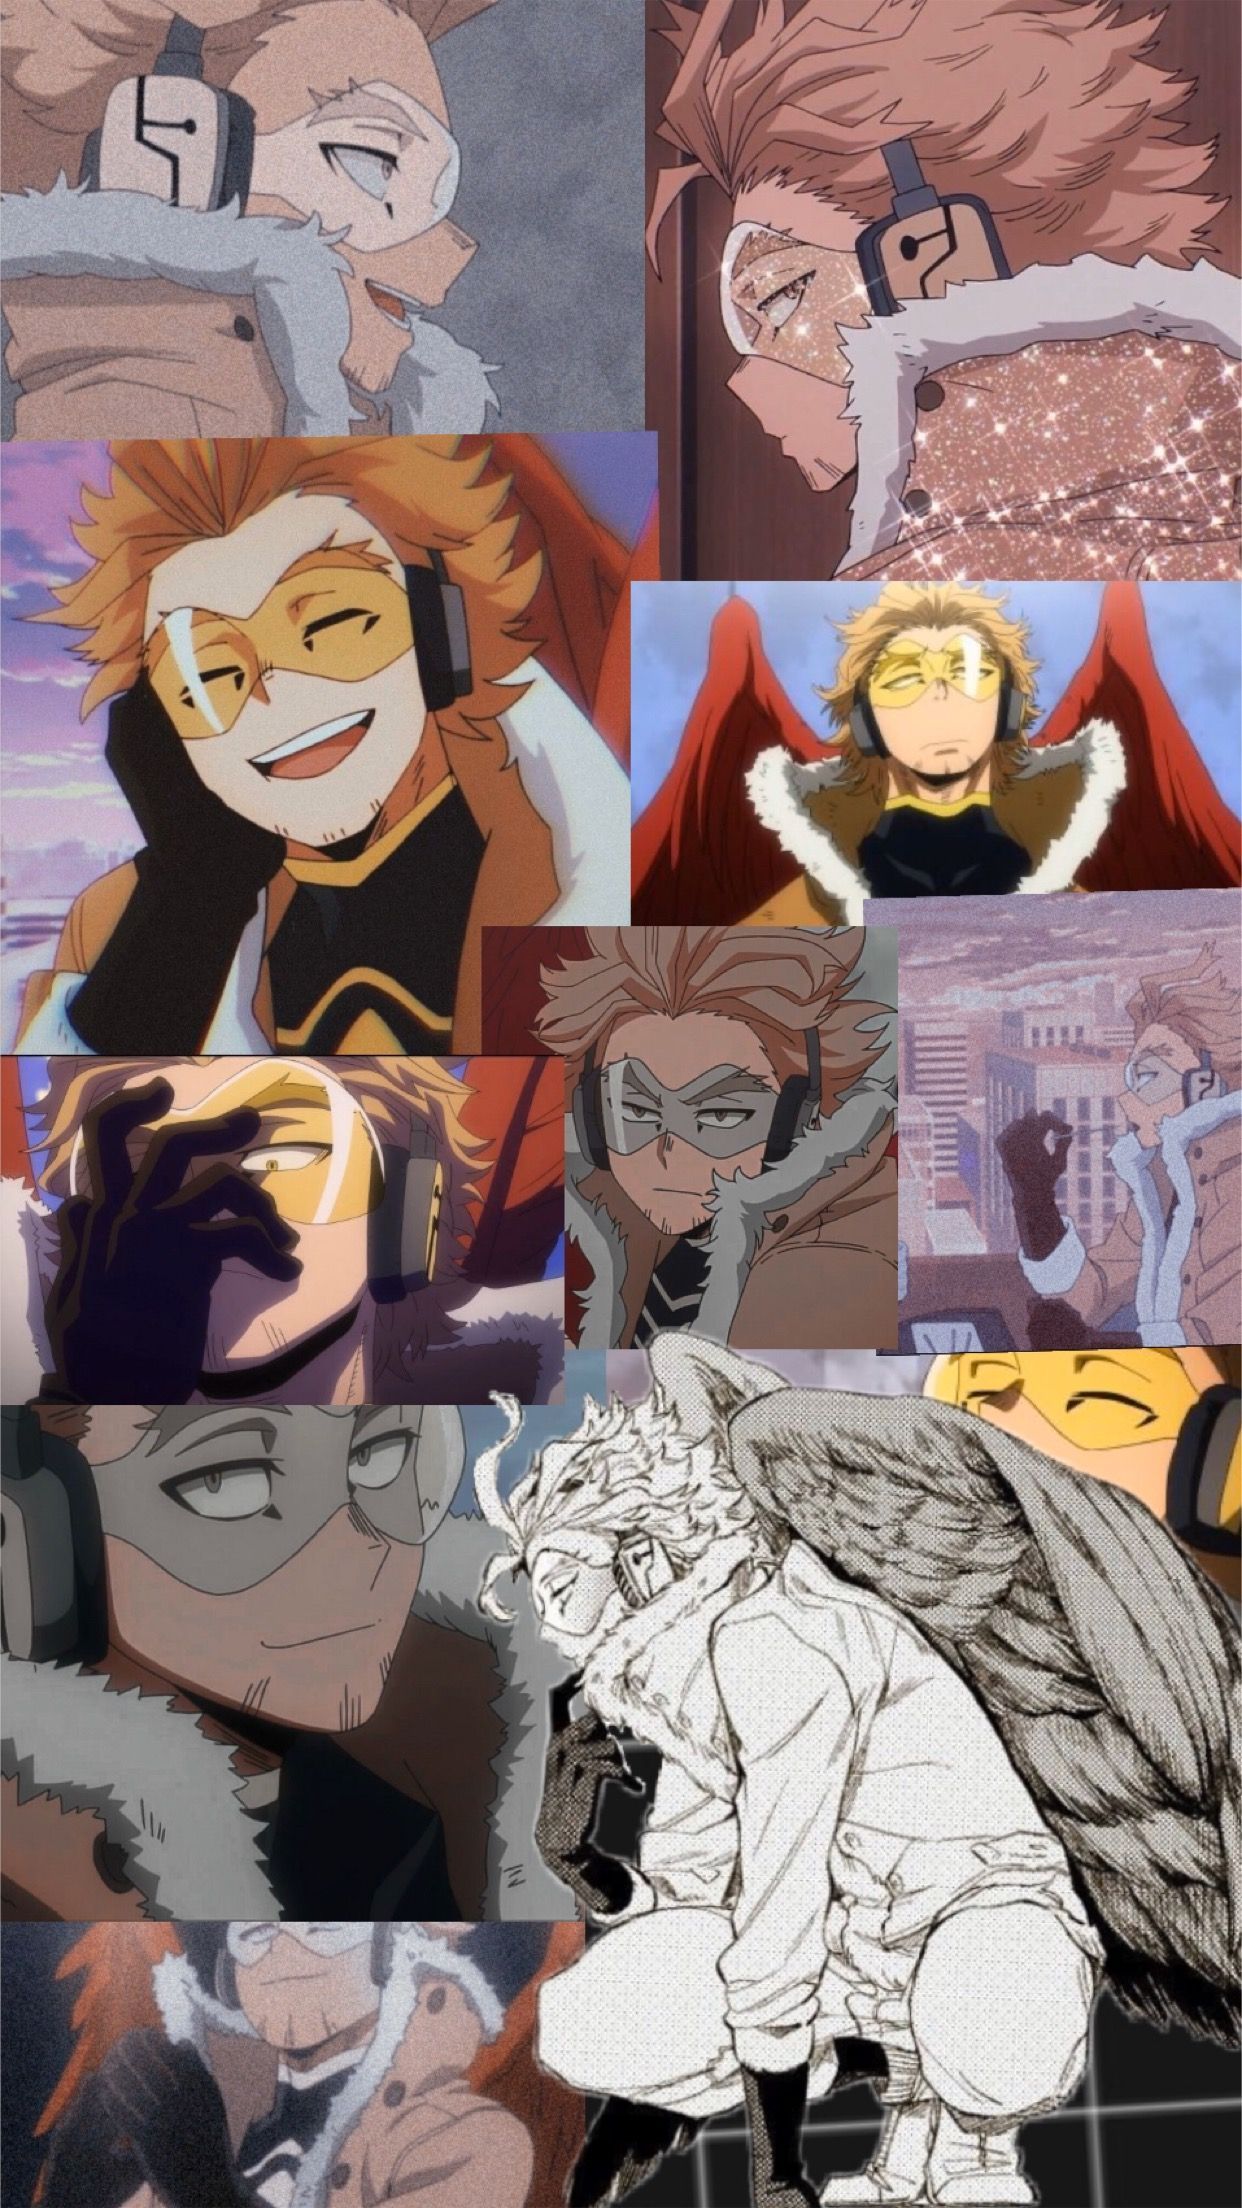 Hawks wallpaper. Anime, Hero wallpaper, Cute anime wallpaper